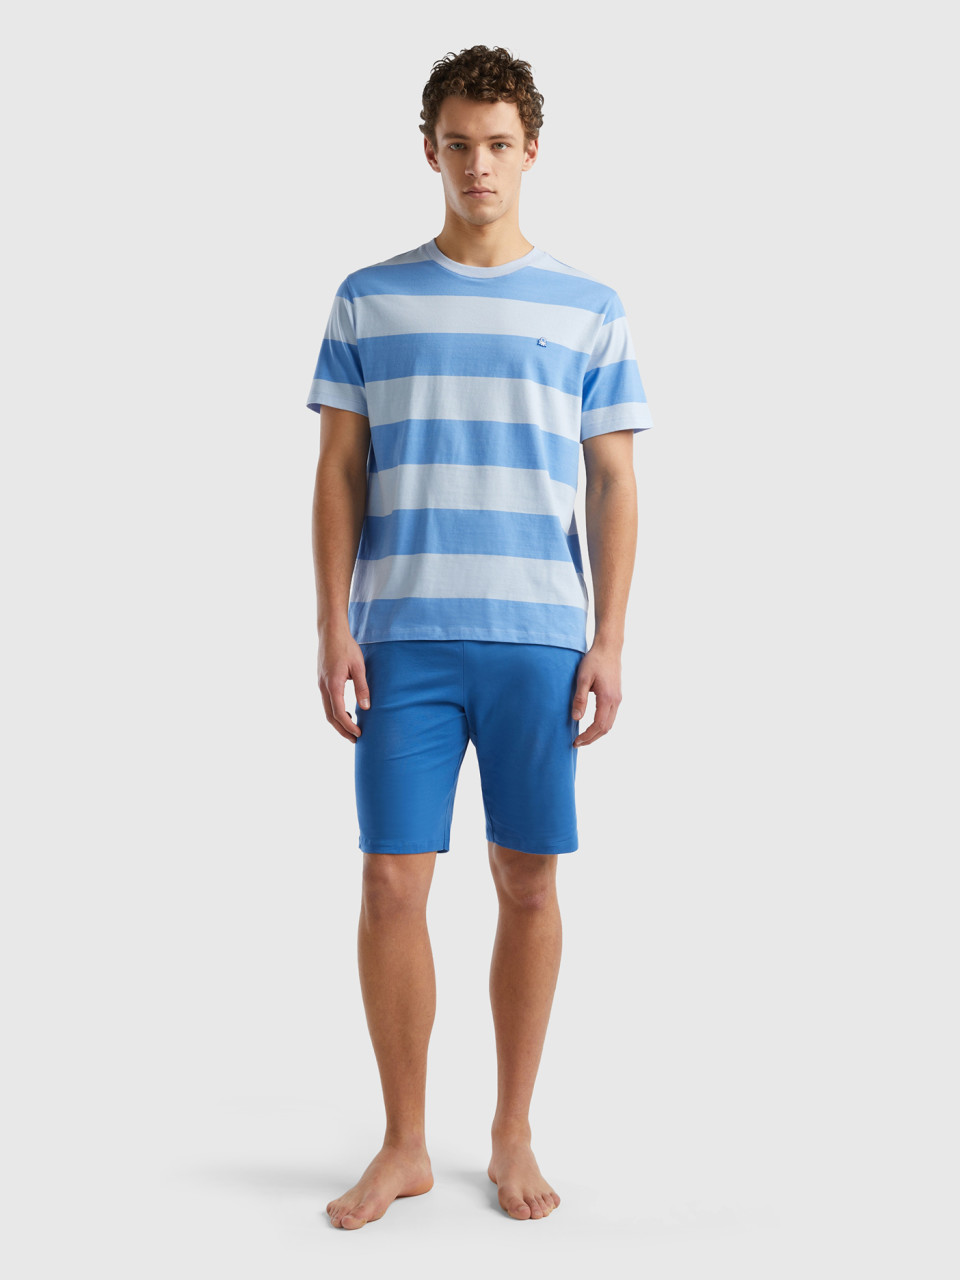 Benetton, Pyjamas With Striped T-shirt, Light Blue, Men